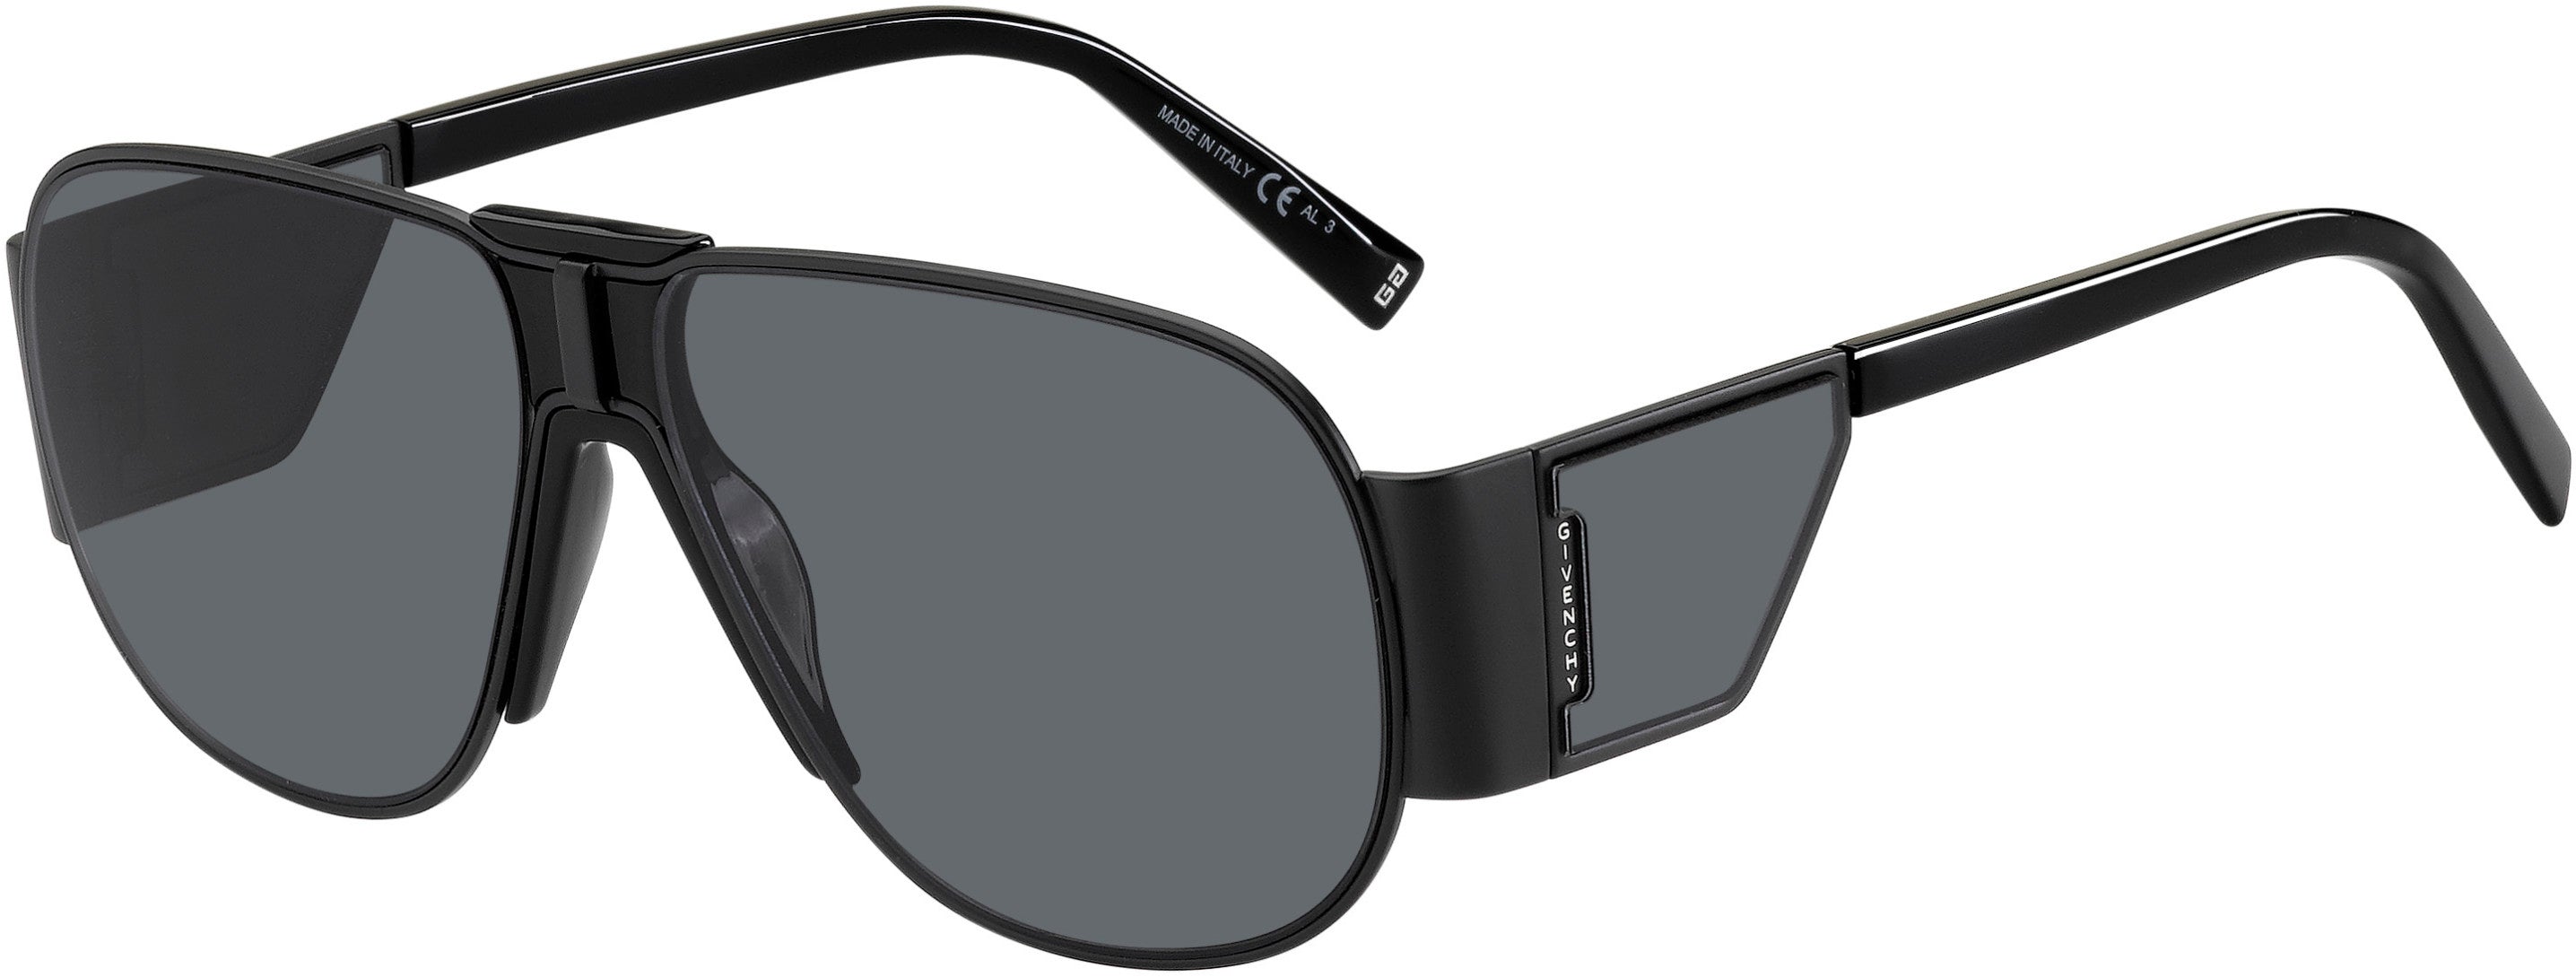  Givenchy 7164/S Rectangular Sunglasses 0807-0807  Black (IR Gray)